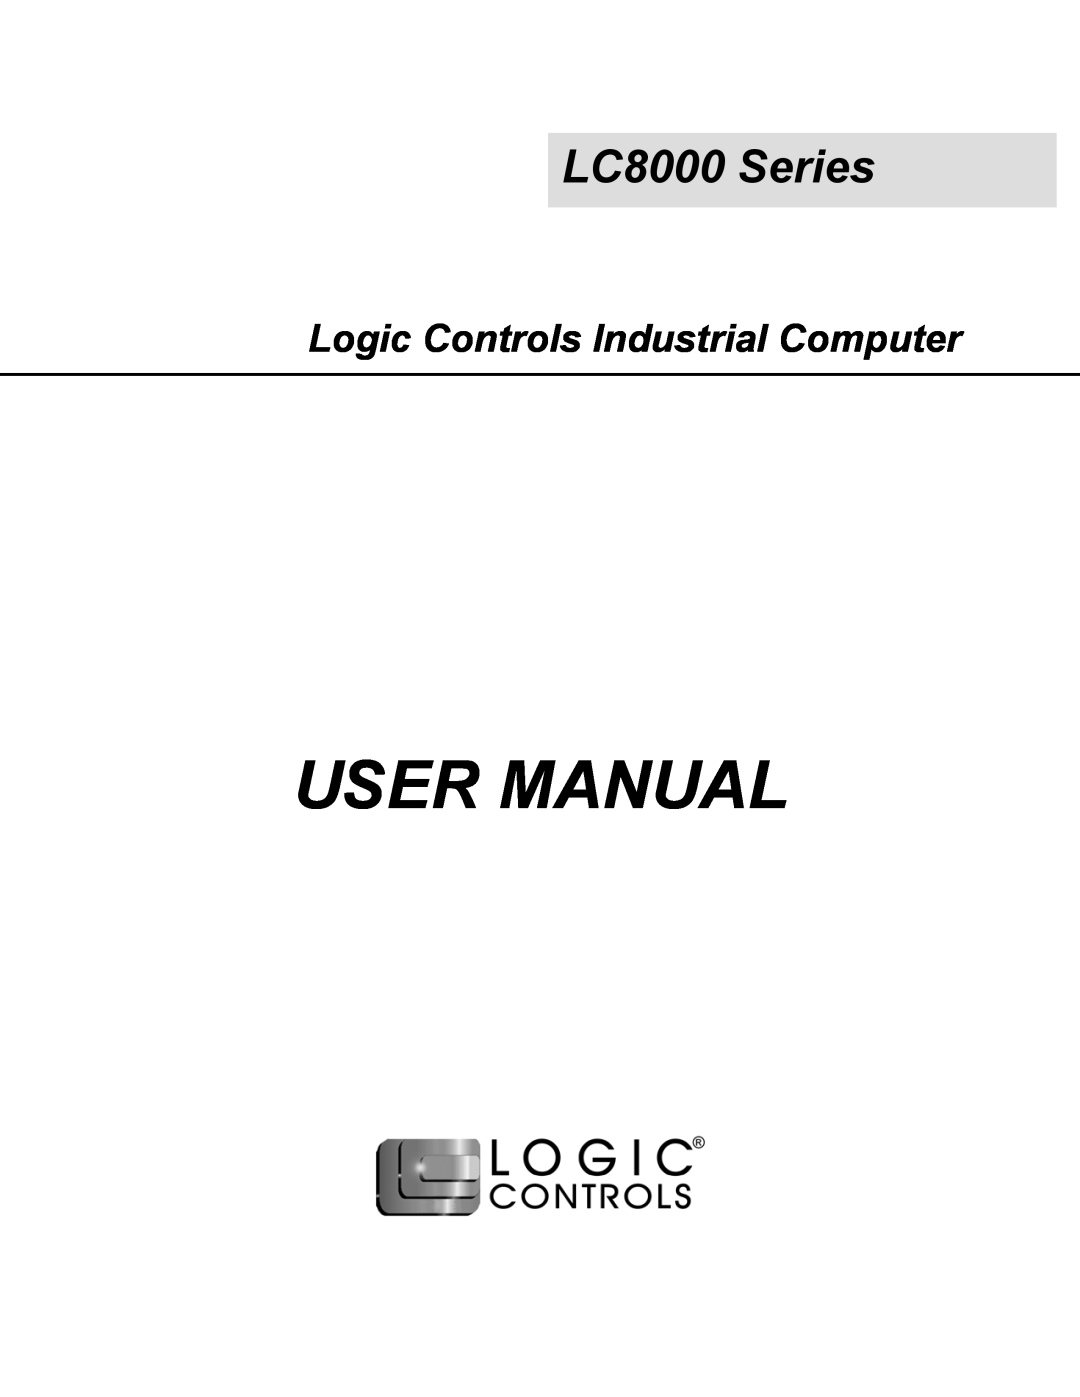 Logic Controls user manual User Manual, LC8000 Series, Logic Controls Industrial Computer 